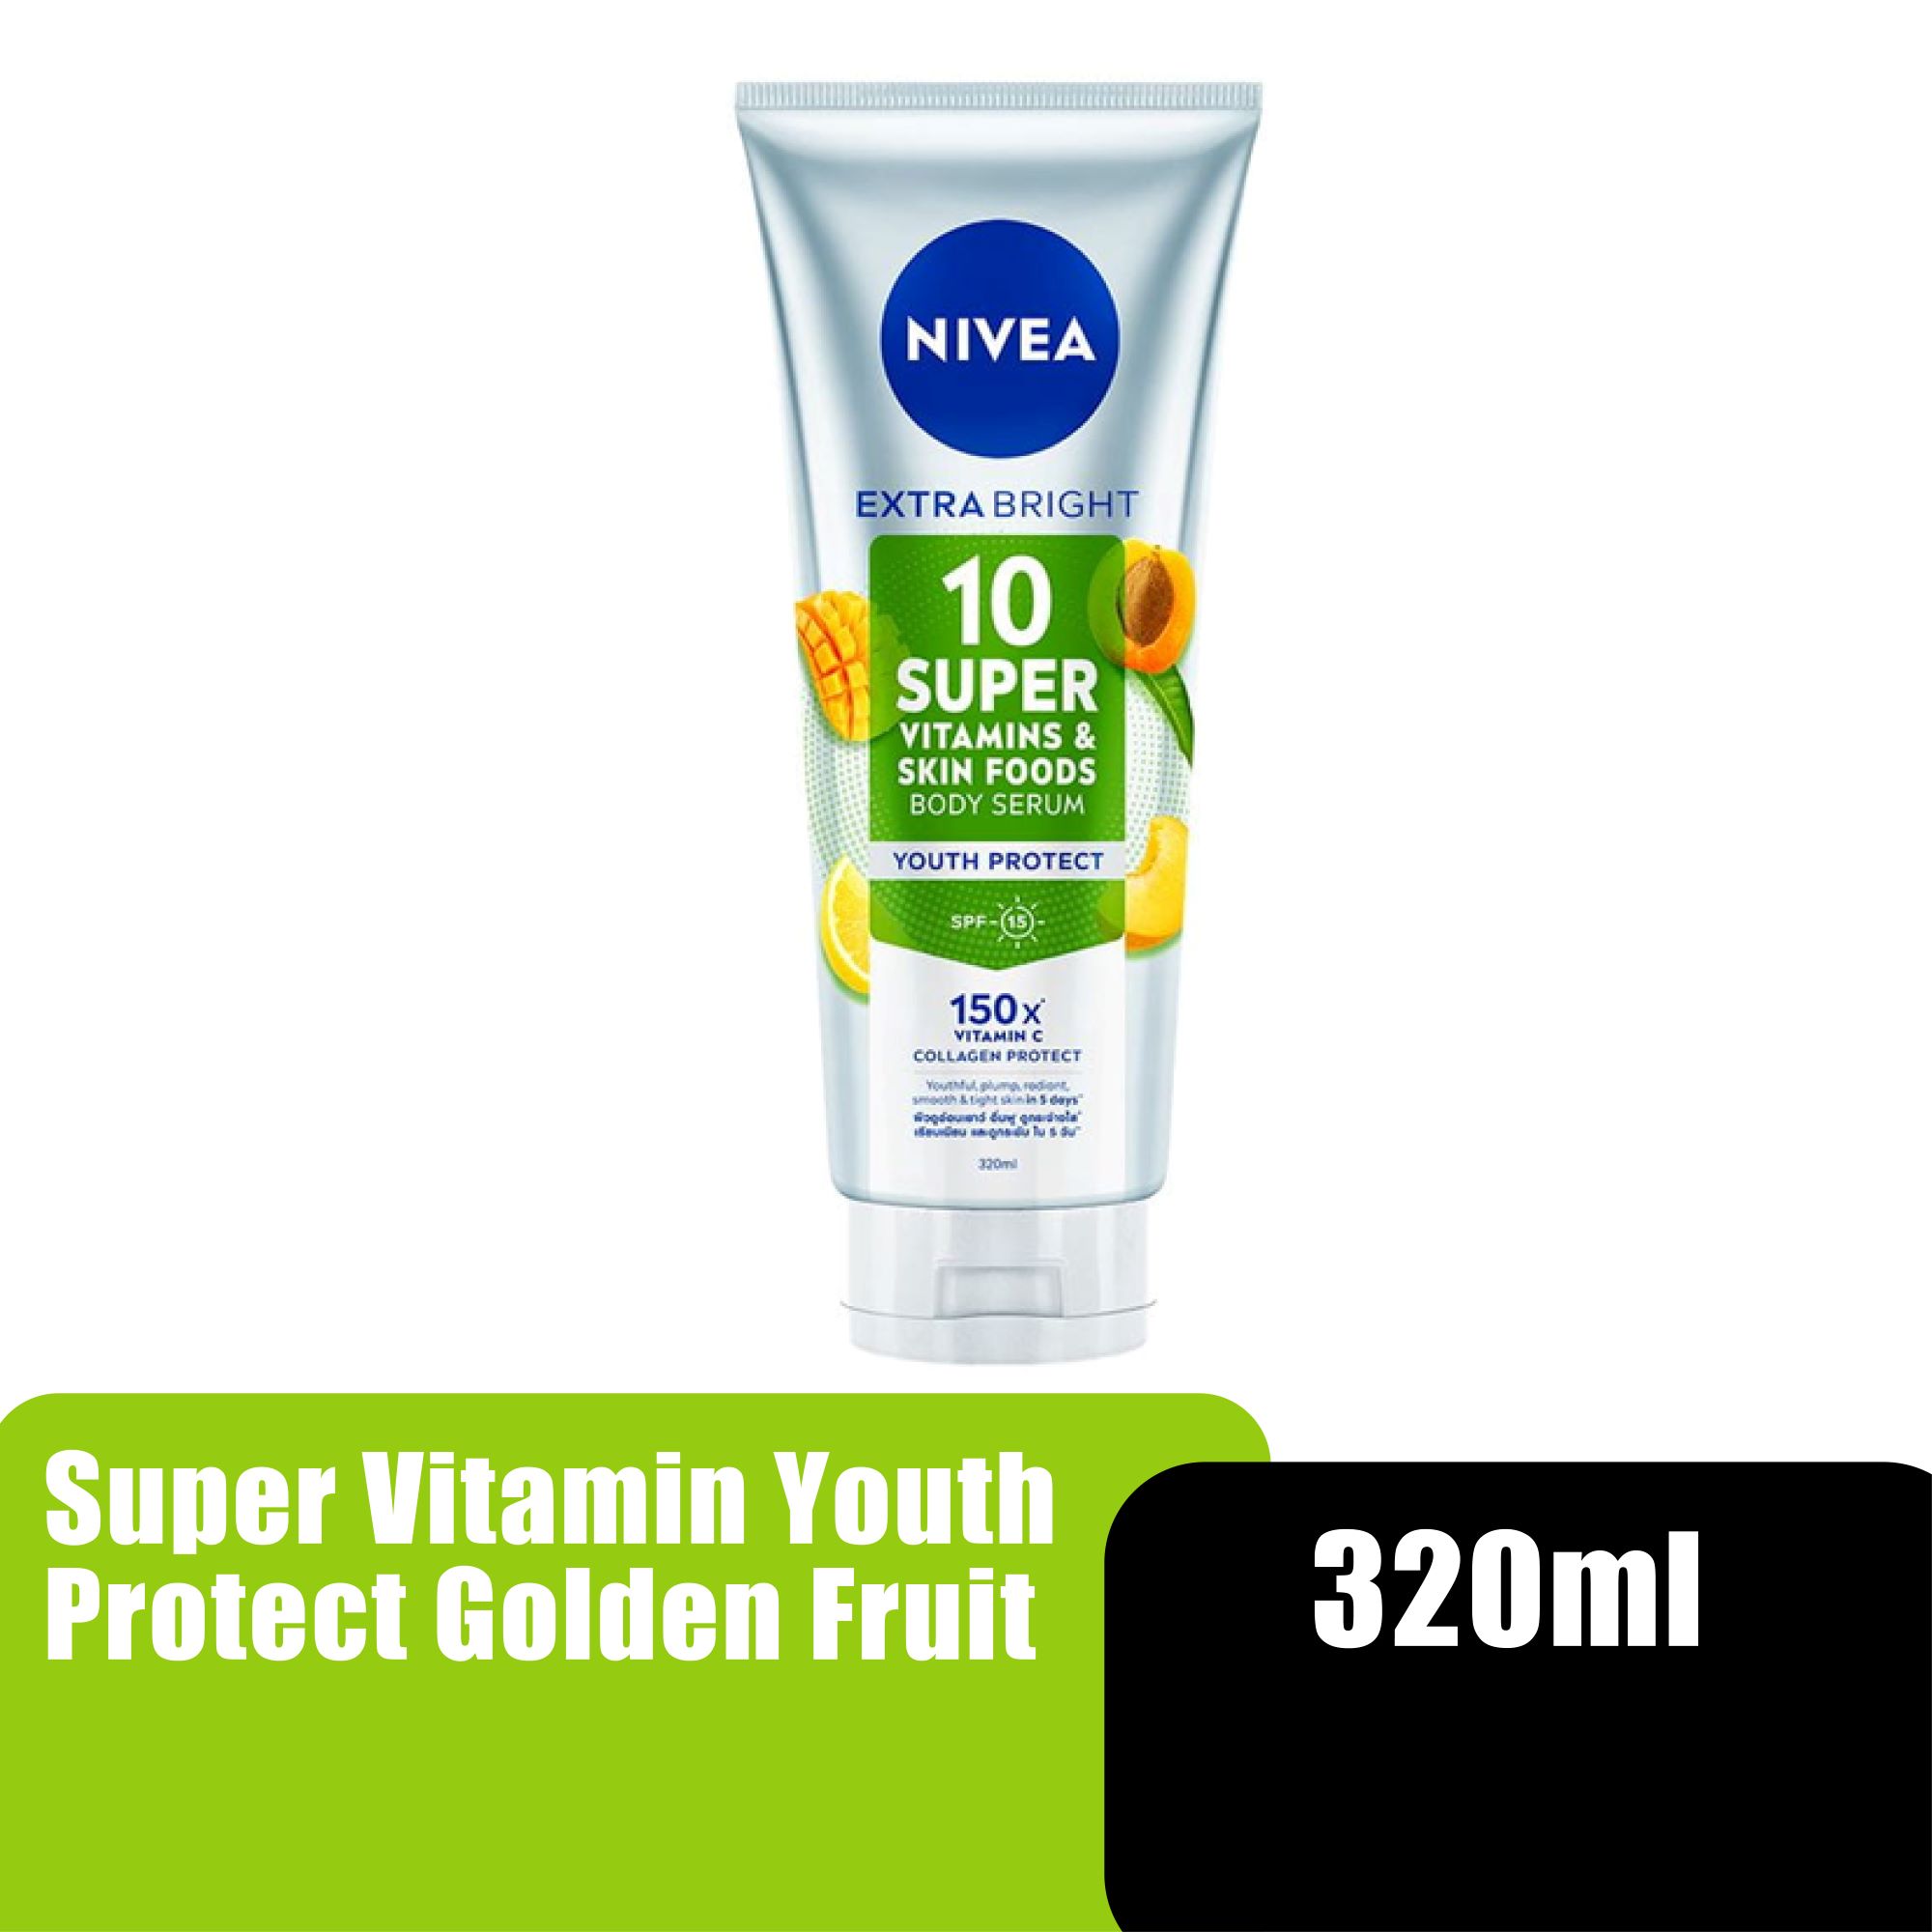 NIVEA EXTRA BRIGHT 10 SUPER VITAMINS & SKIN FOODS YOUTH PROTECT SERUM 320ML (93757)